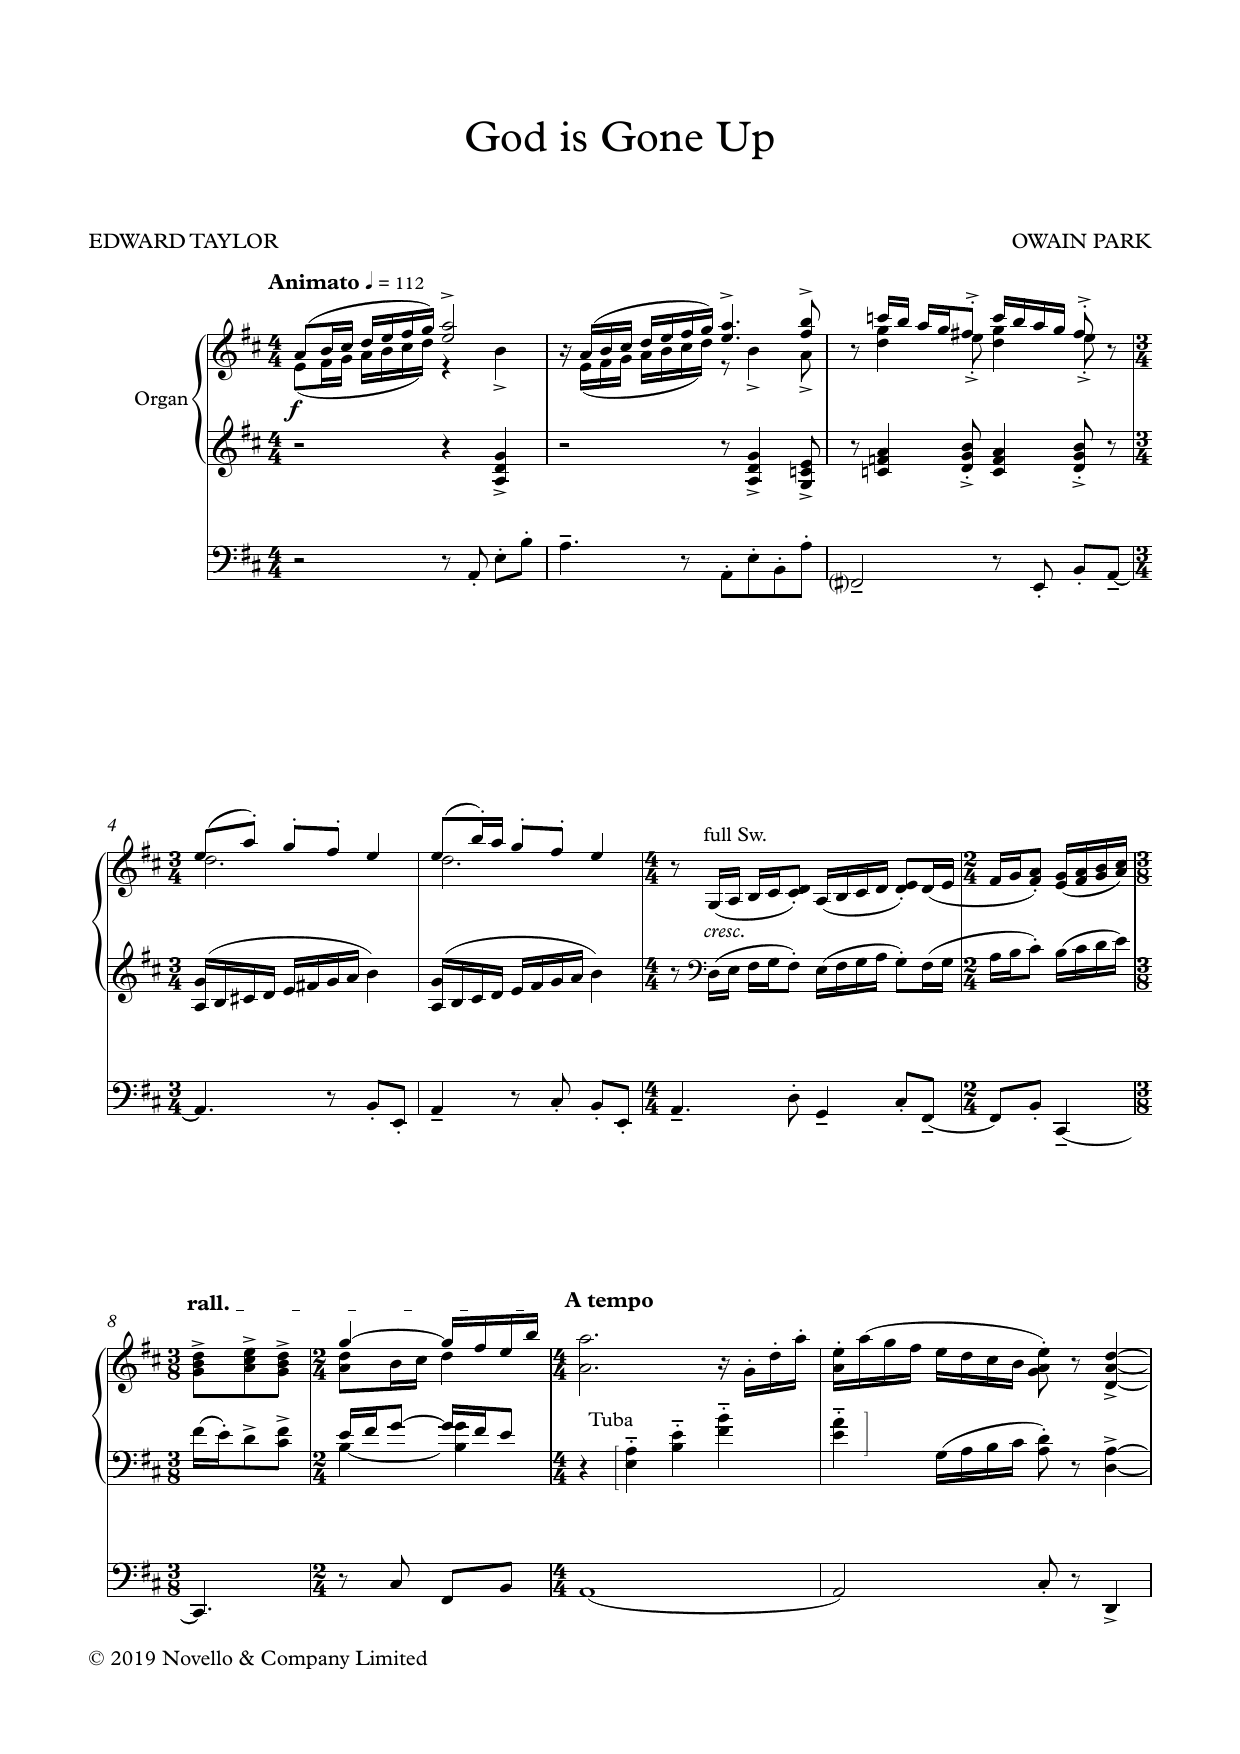 Owain Park God Is Gone Up sheet music notes printable PDF score